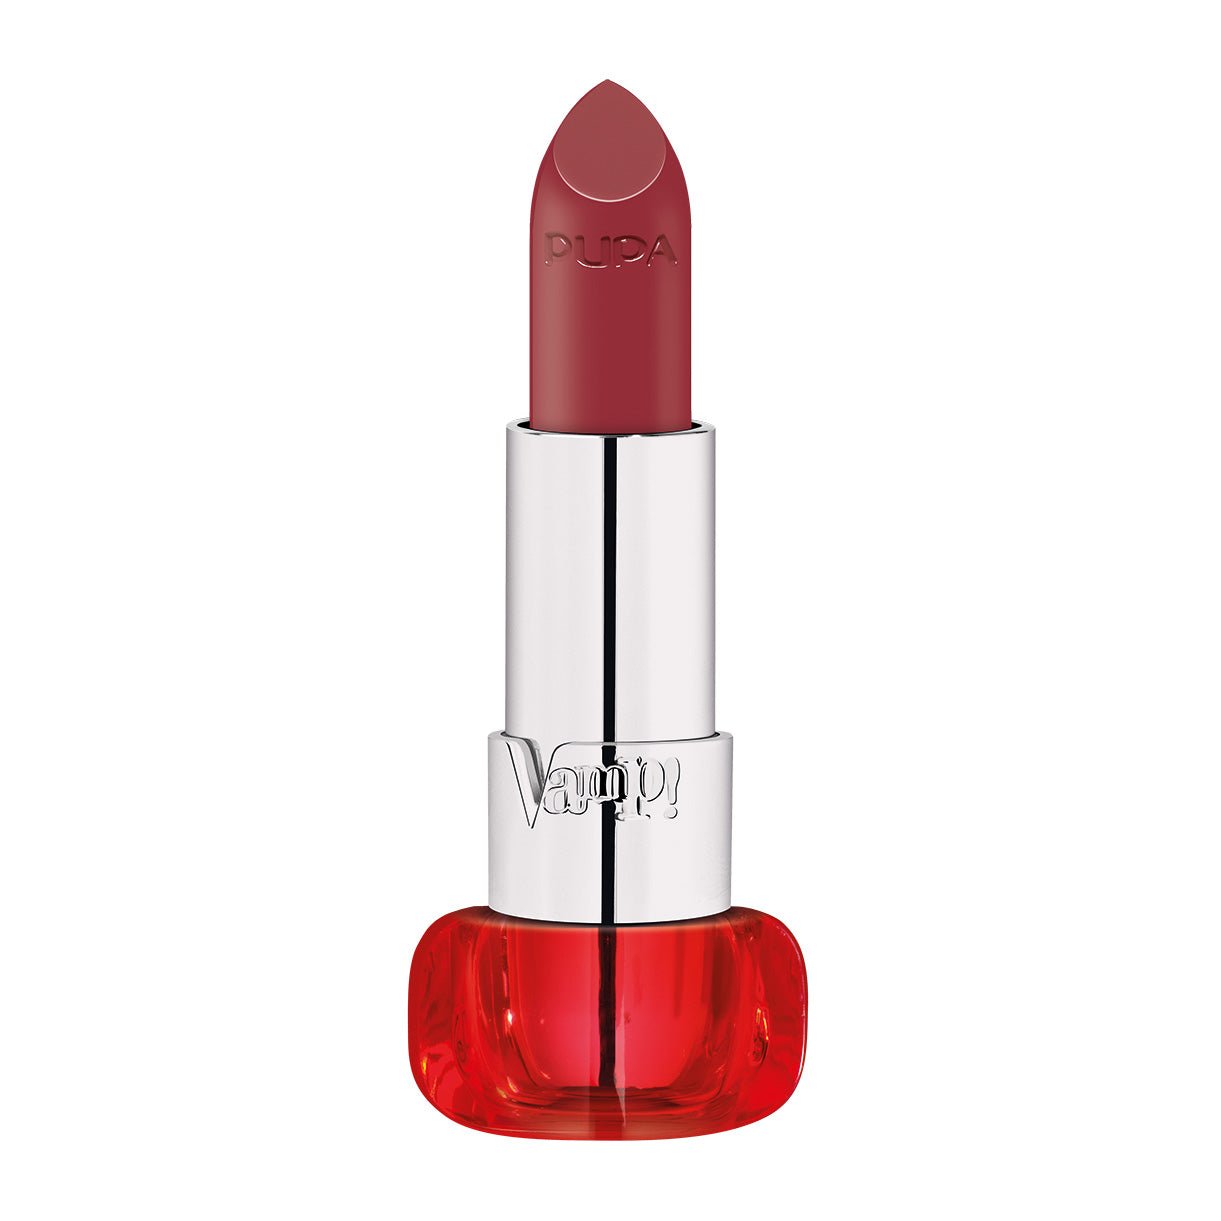 Pupa vamp Extreme Colour lipstick - Bloom Pharmacy